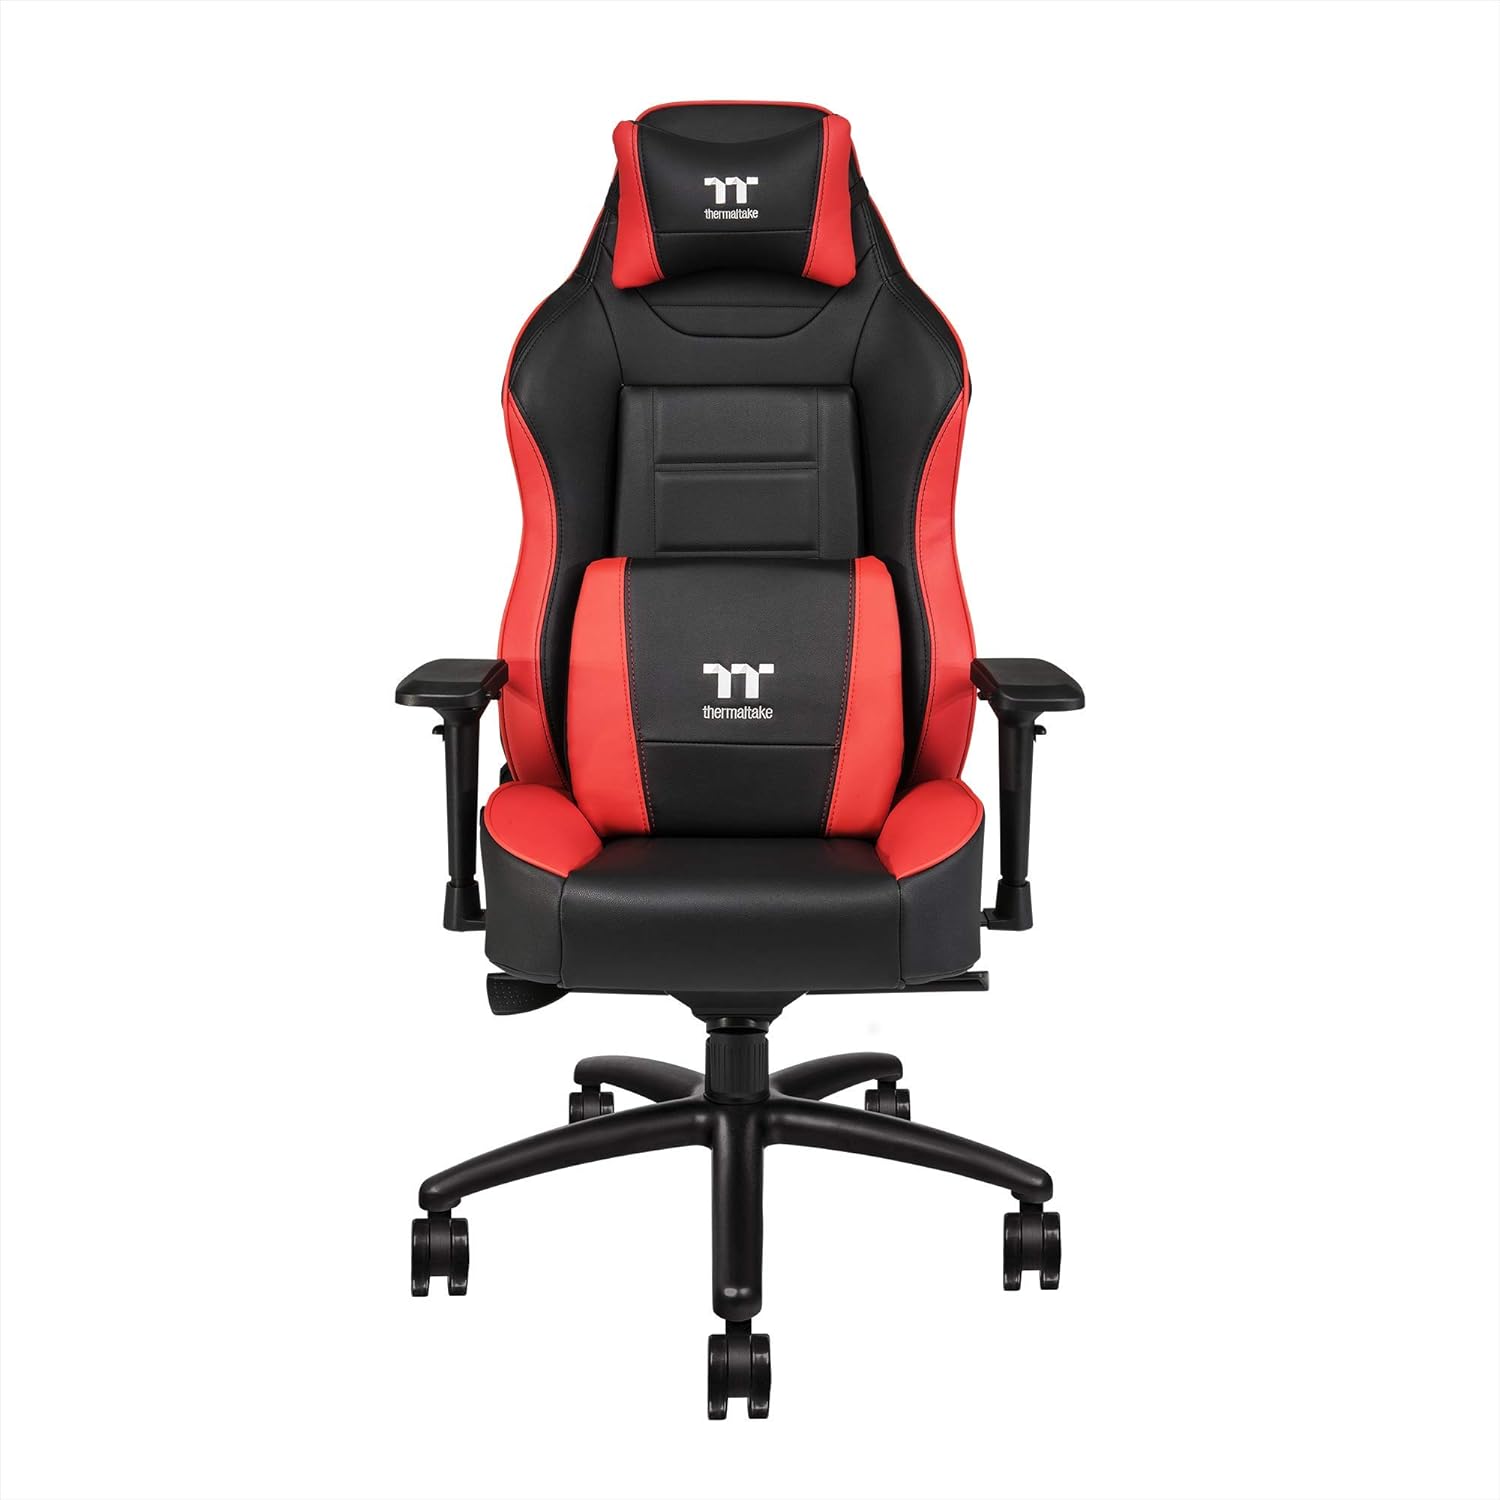 Thermaltake X Comfort Gaming Chair